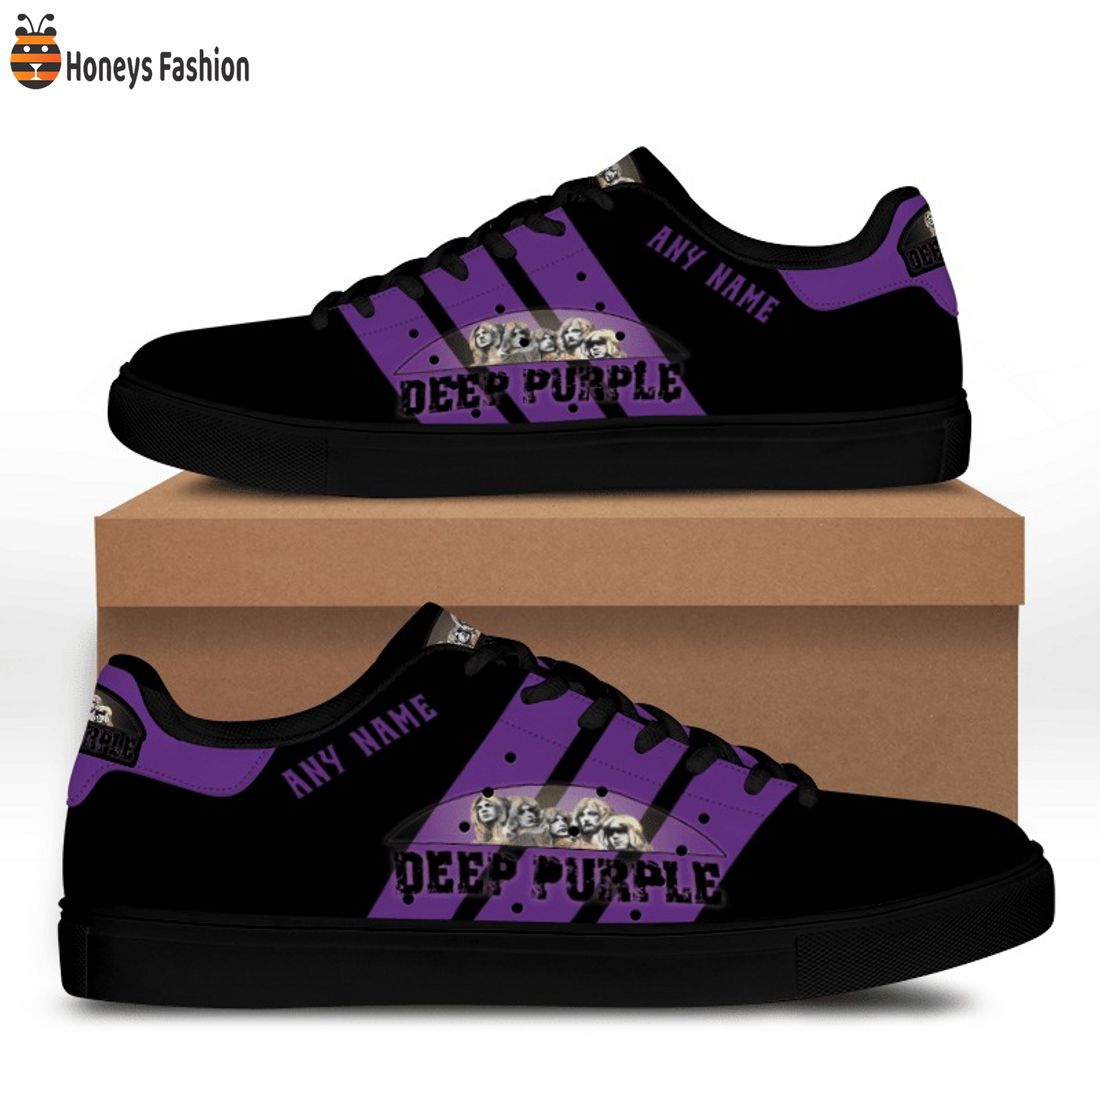 Deep Purple custom name ver 3 stan smith adidas shoes